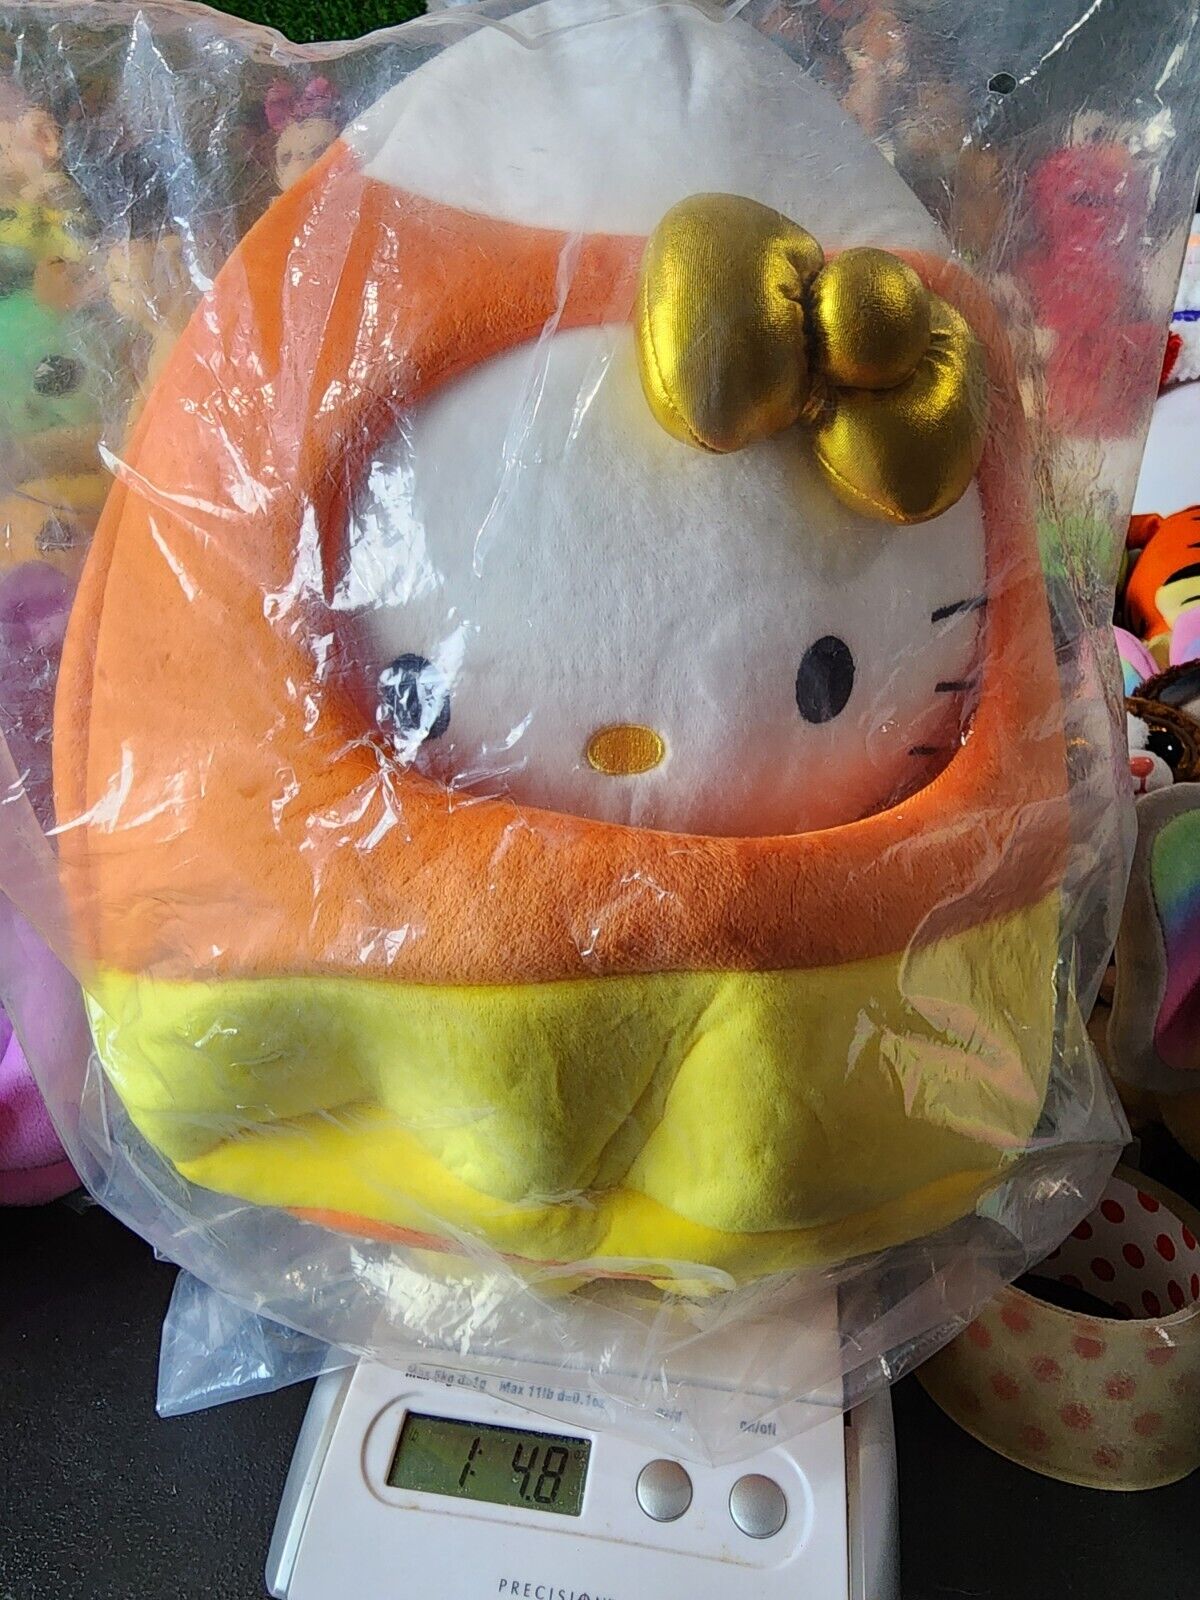 Kidrobot Sanrio Hello Kitty in Candy Corn Halloween Costume 12 Inch Plush